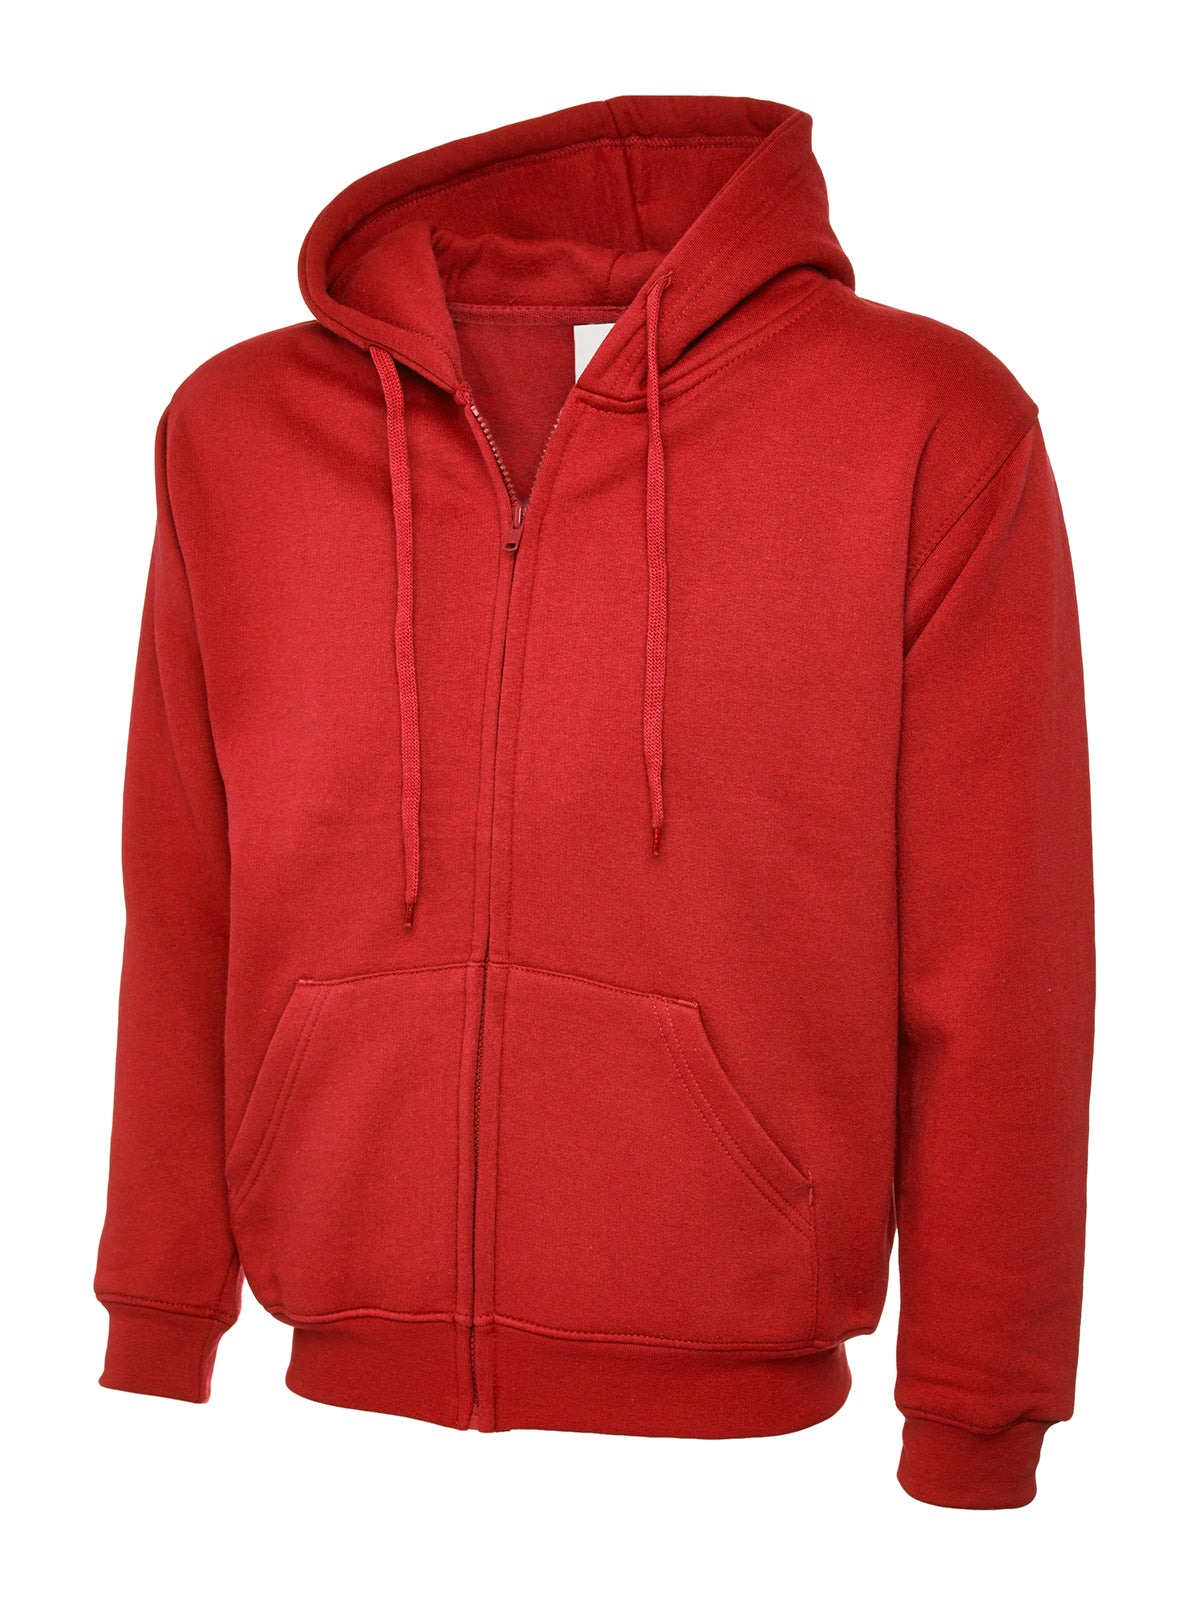 Uneek Adults Unisex Classic Full Zip Hooded Sweatshirt UC504 - Red